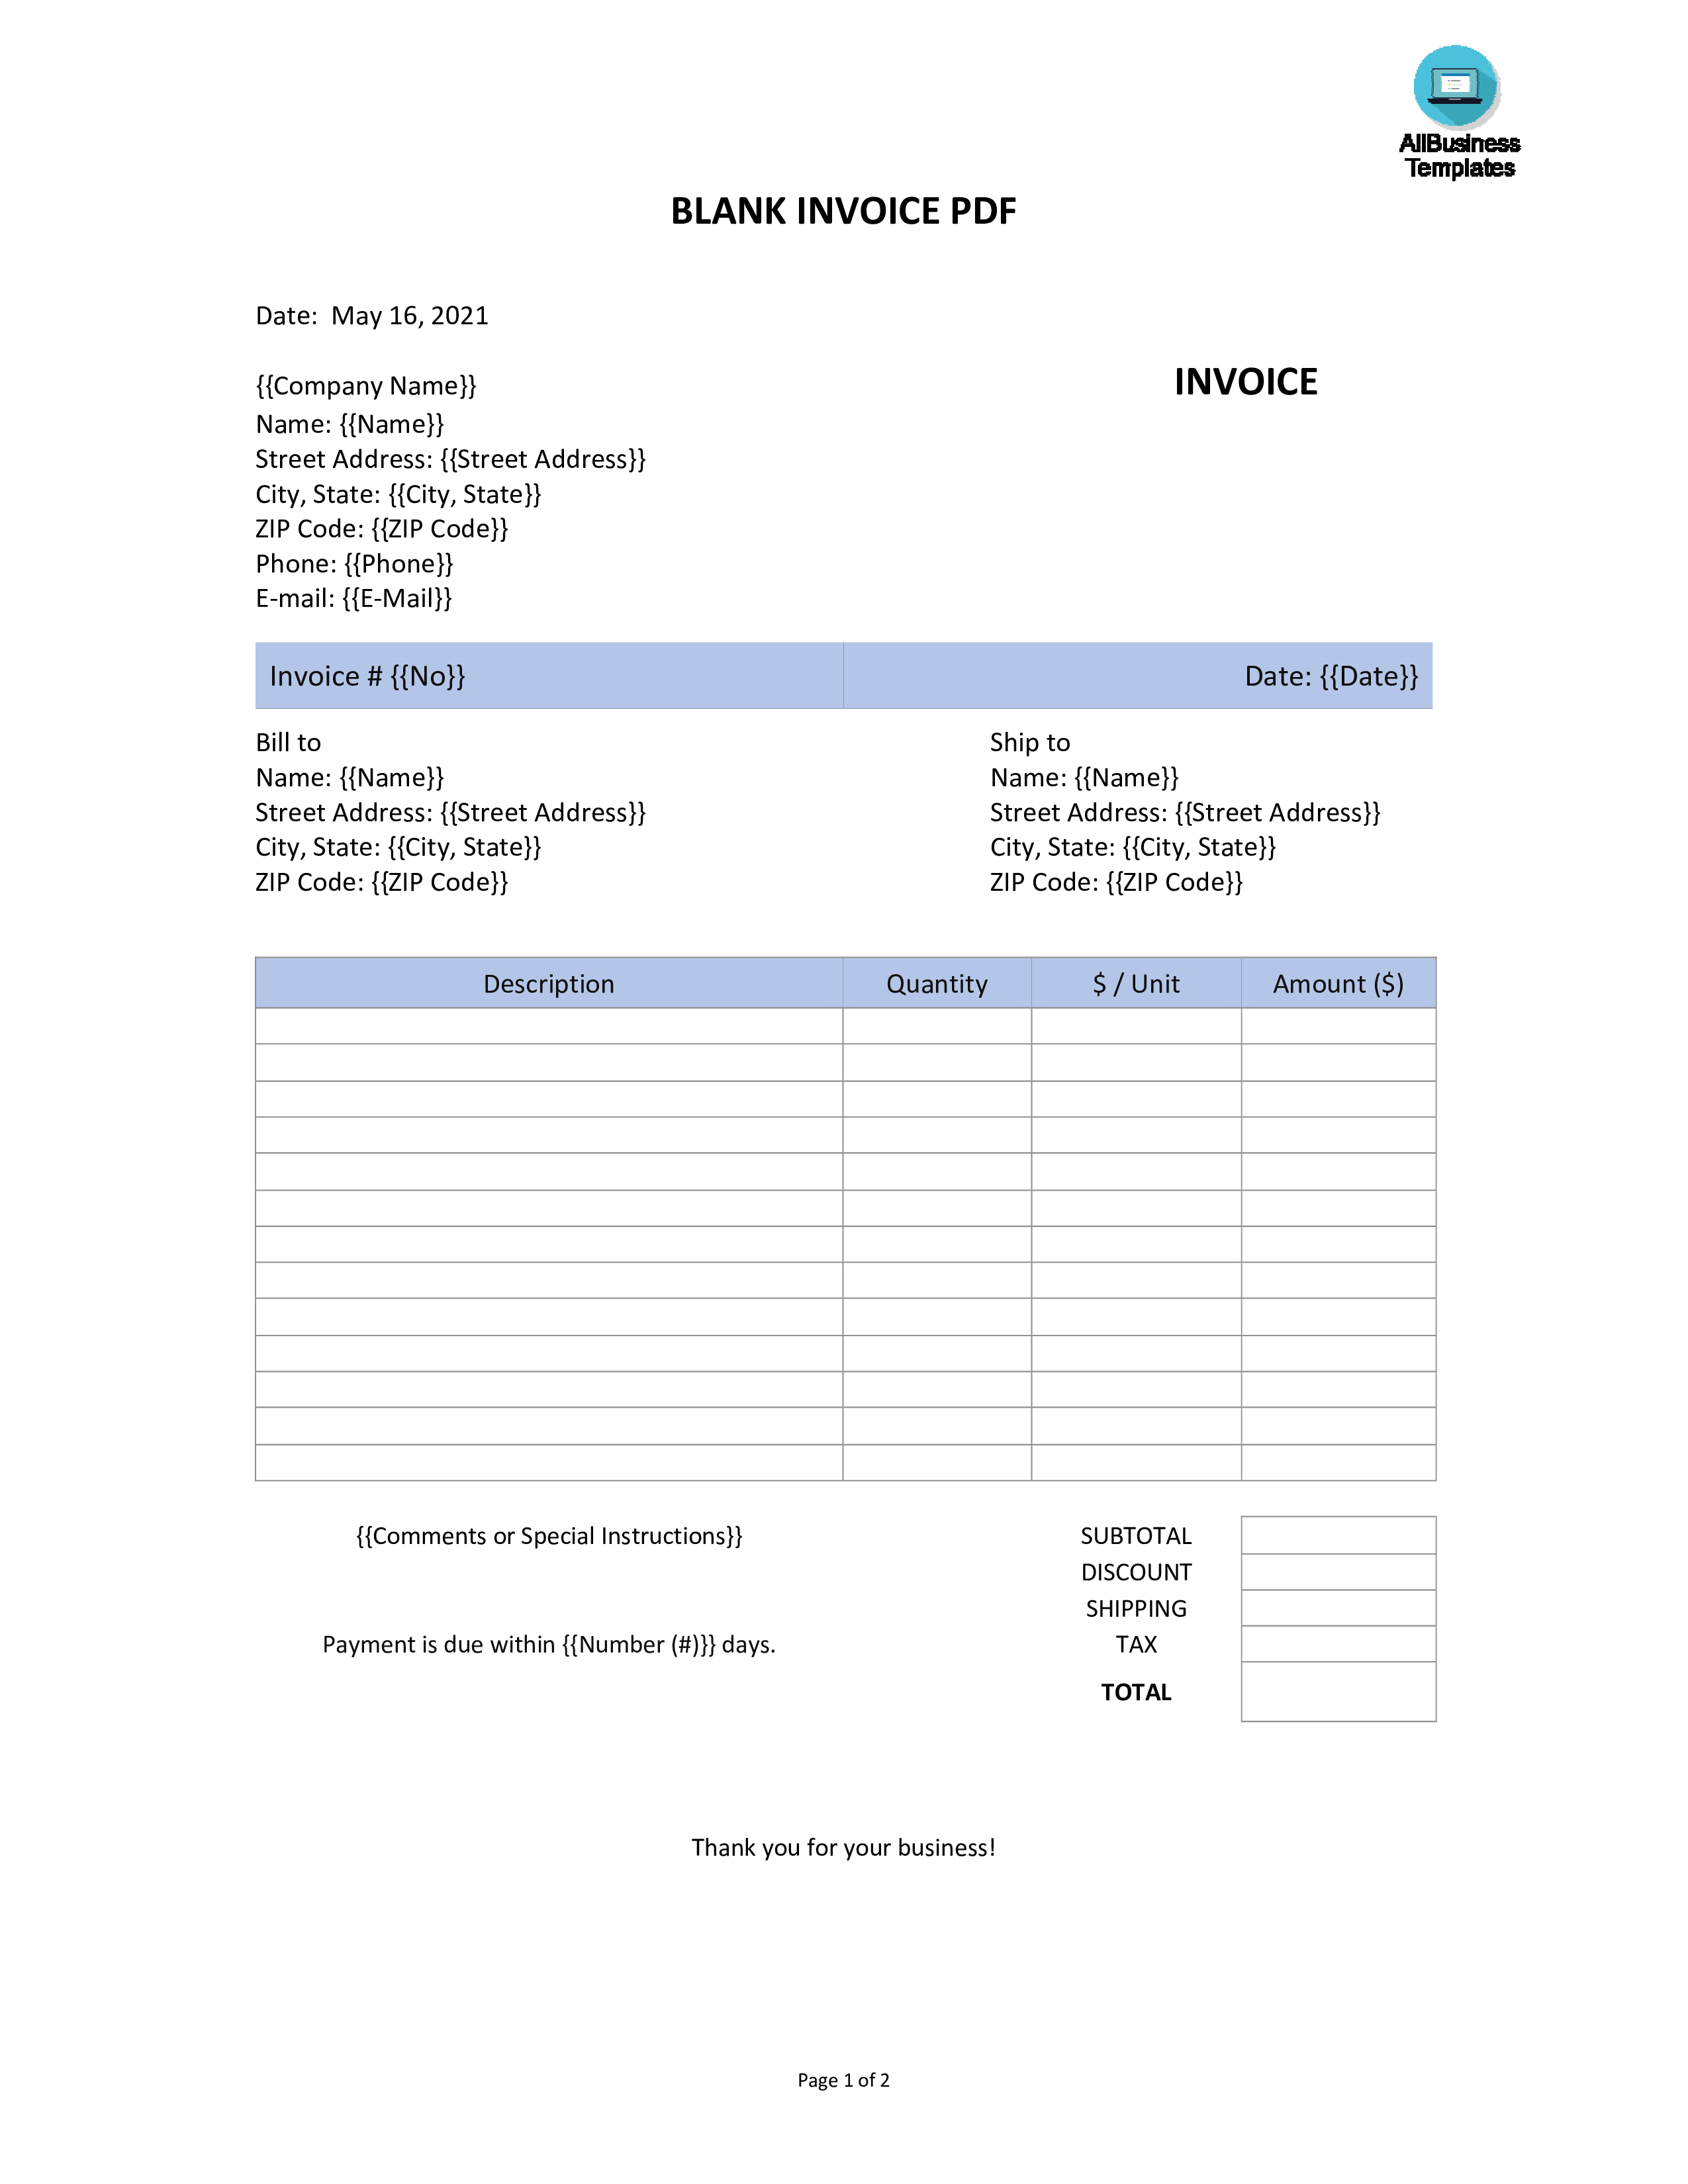 blank-invoice-pdf-templates-at-allbusinesstemplates